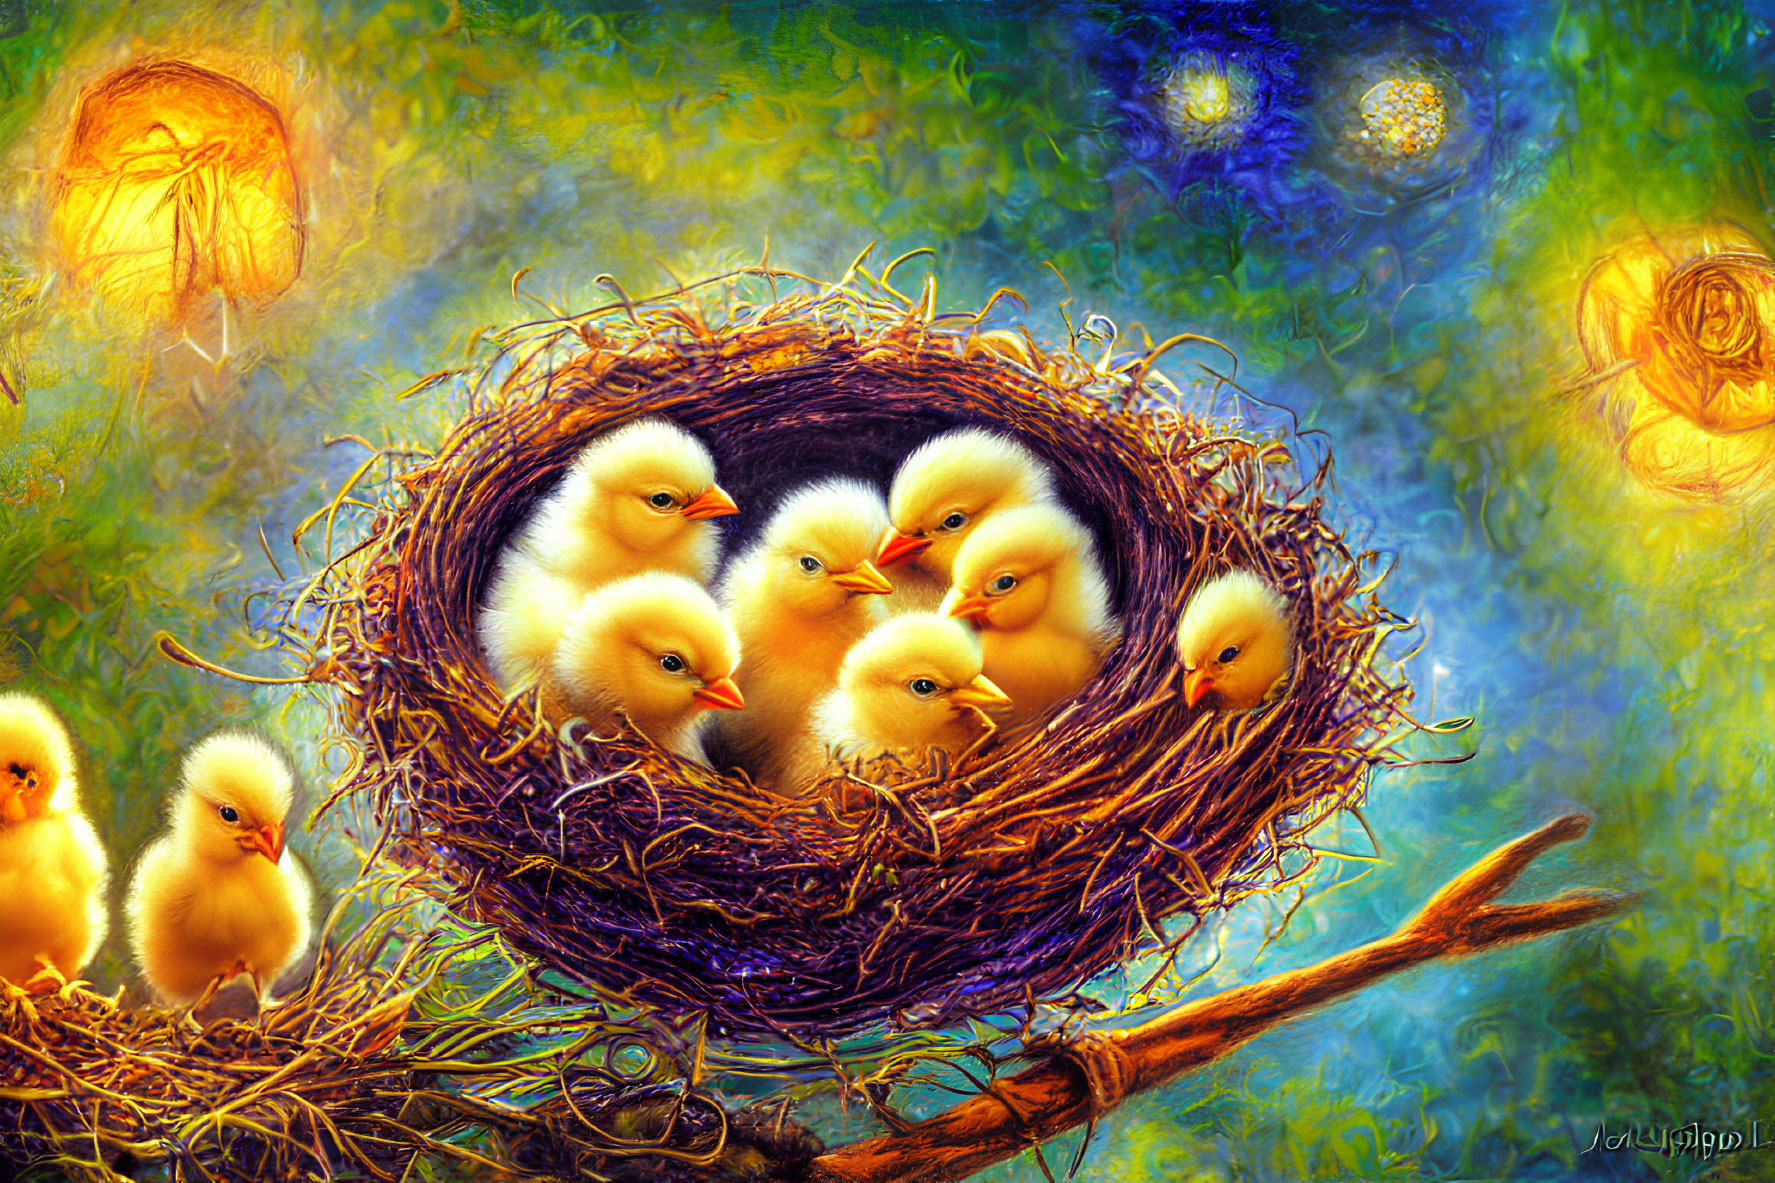 Colorful Digital Artwork: Seven Fluffy Chicks in Nest